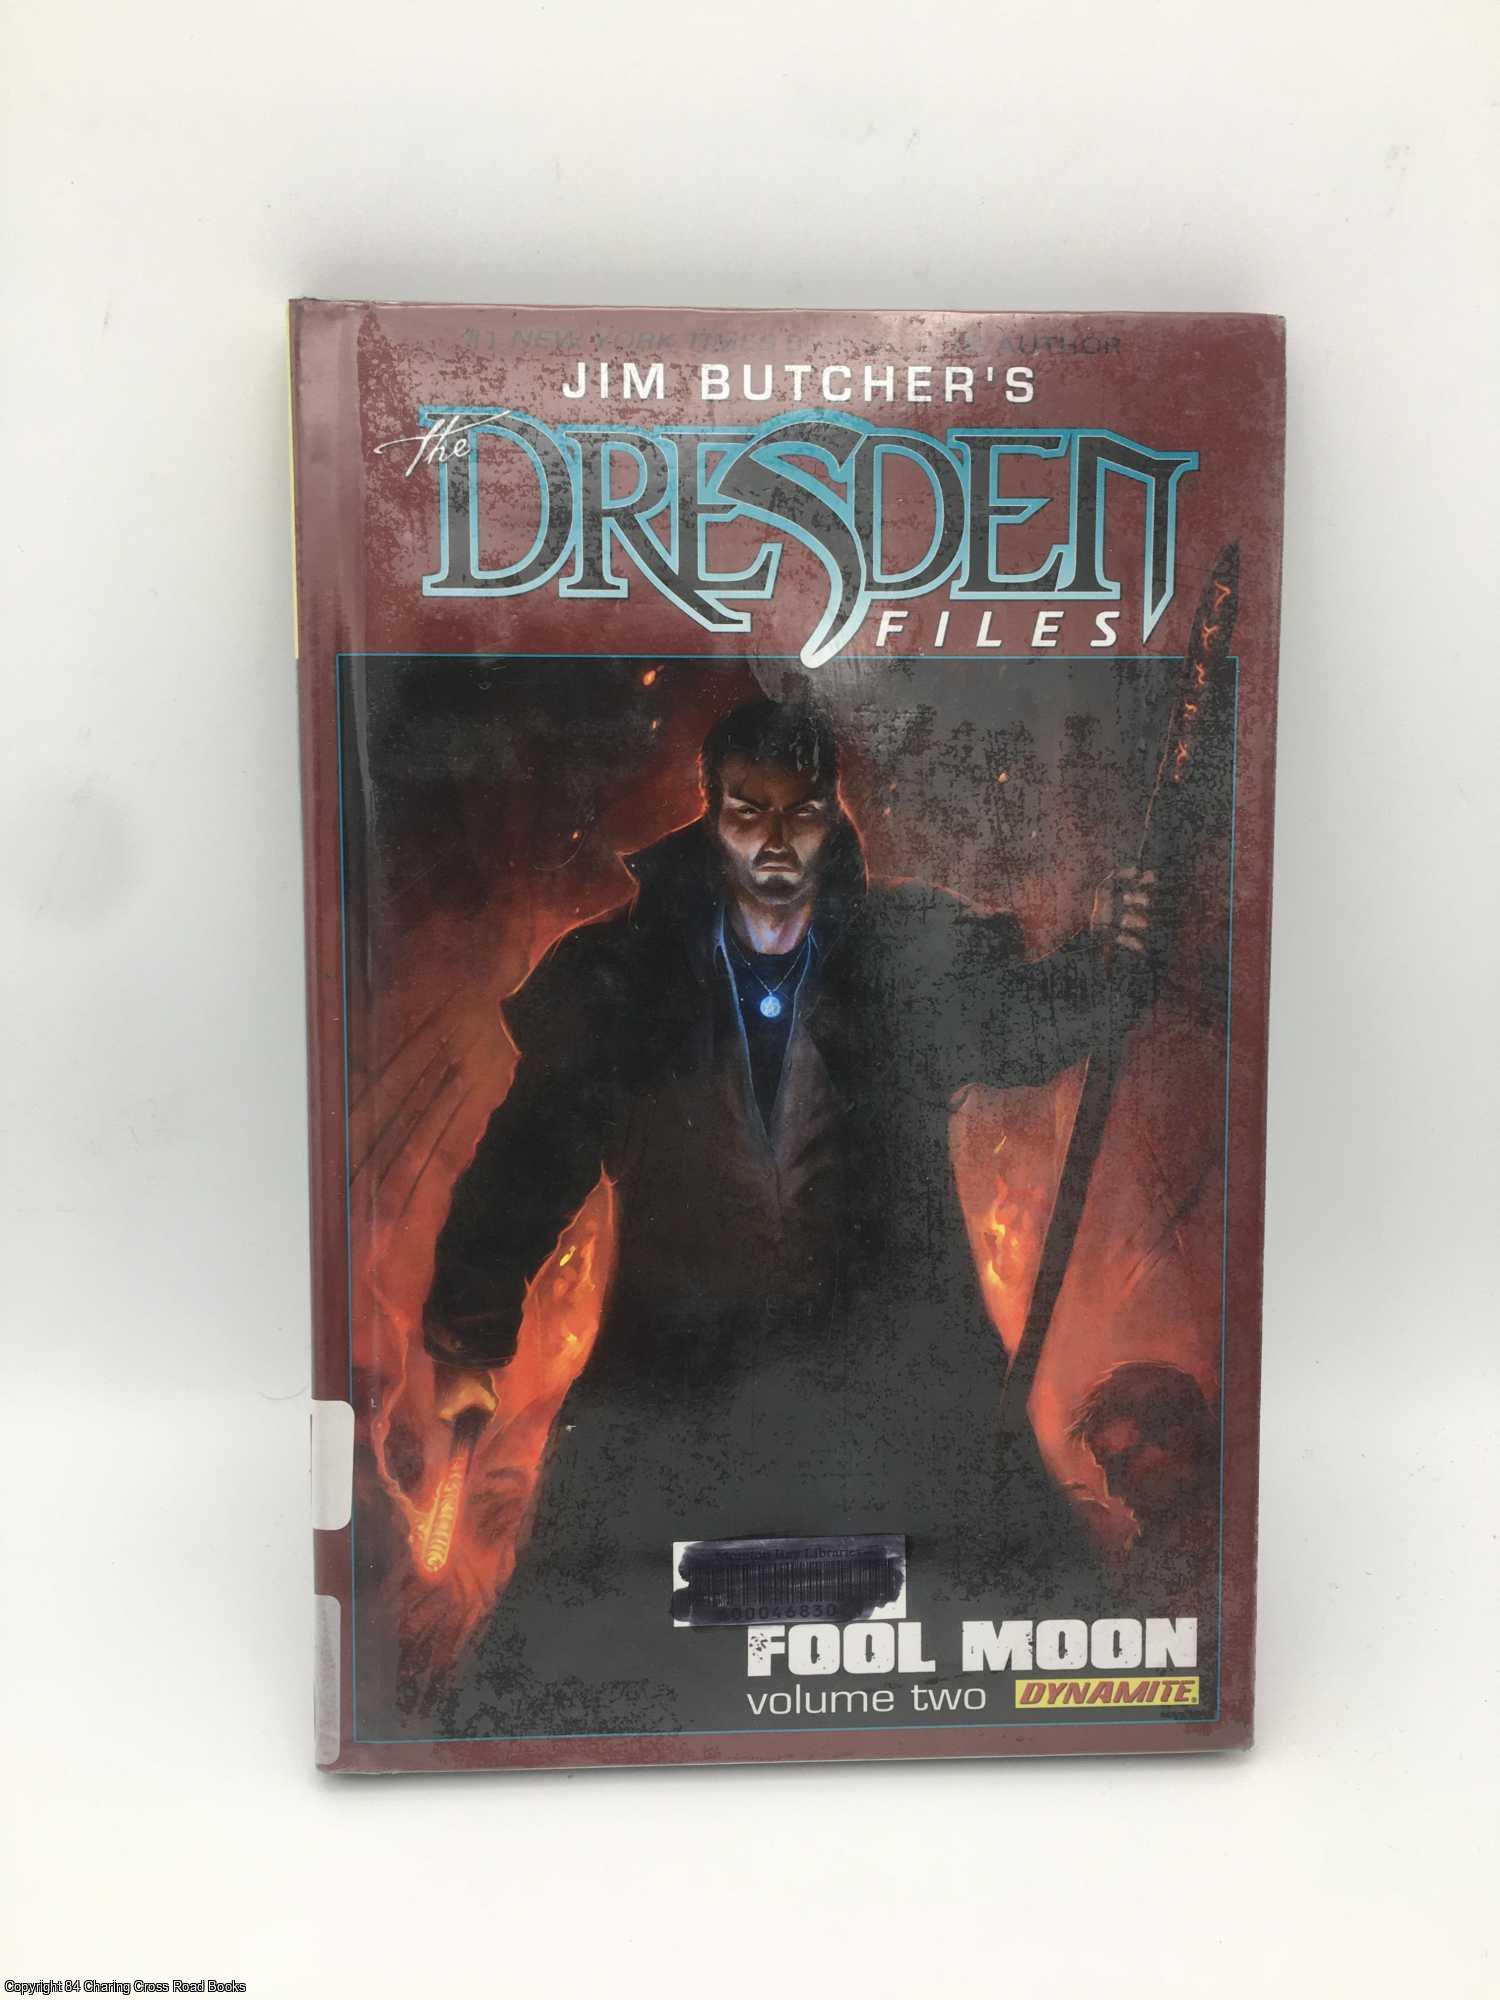 Butcher, Jim - Jim Butcher's The Dresden Files: Fool Moon Volume 2